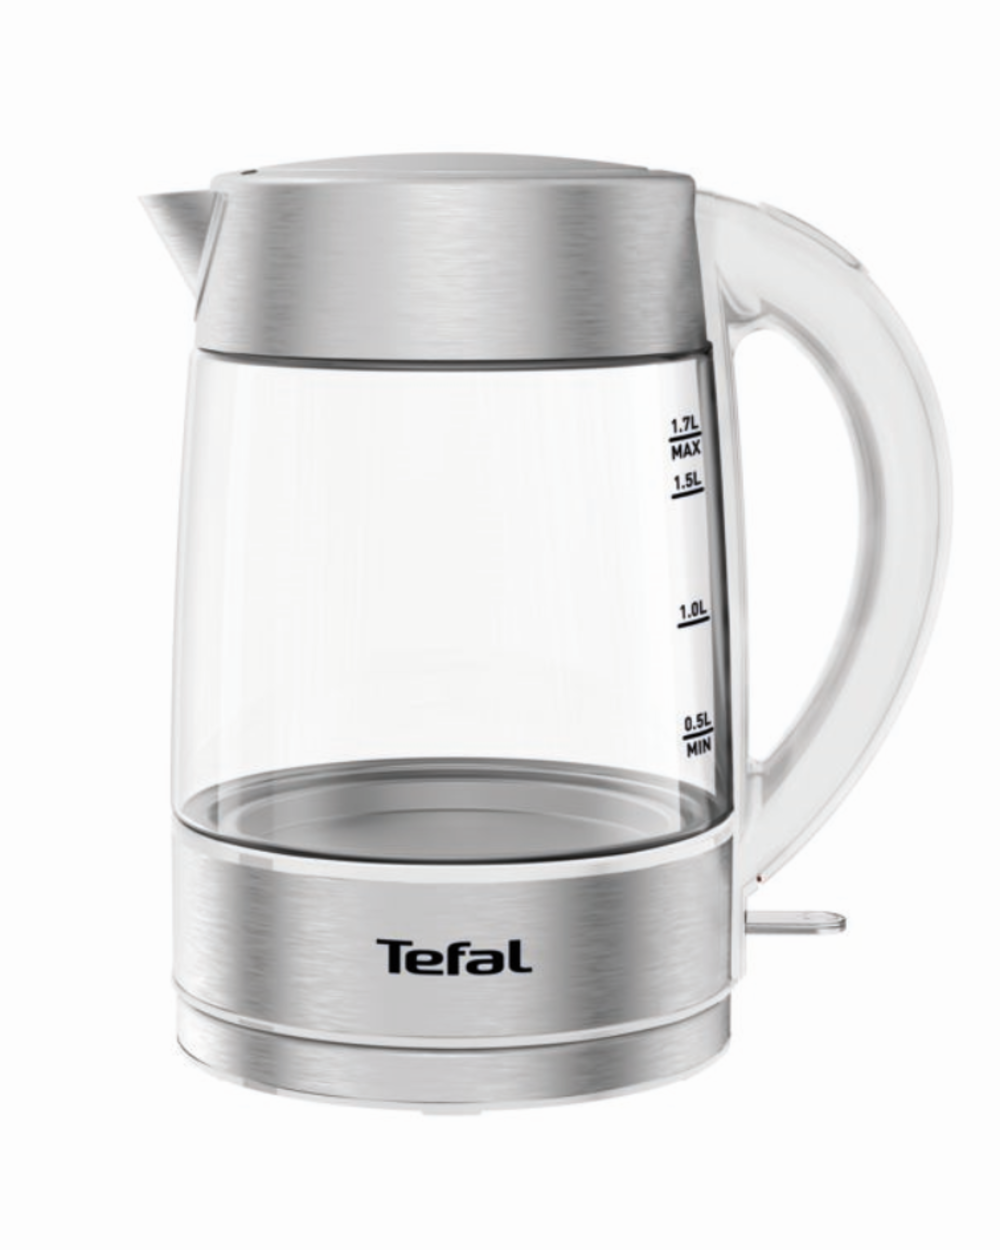 Чайник электрический Tefal KI772138 1.7 л прозрачный, белый чайник электрический tefal ki772138 1 7 л transparent white